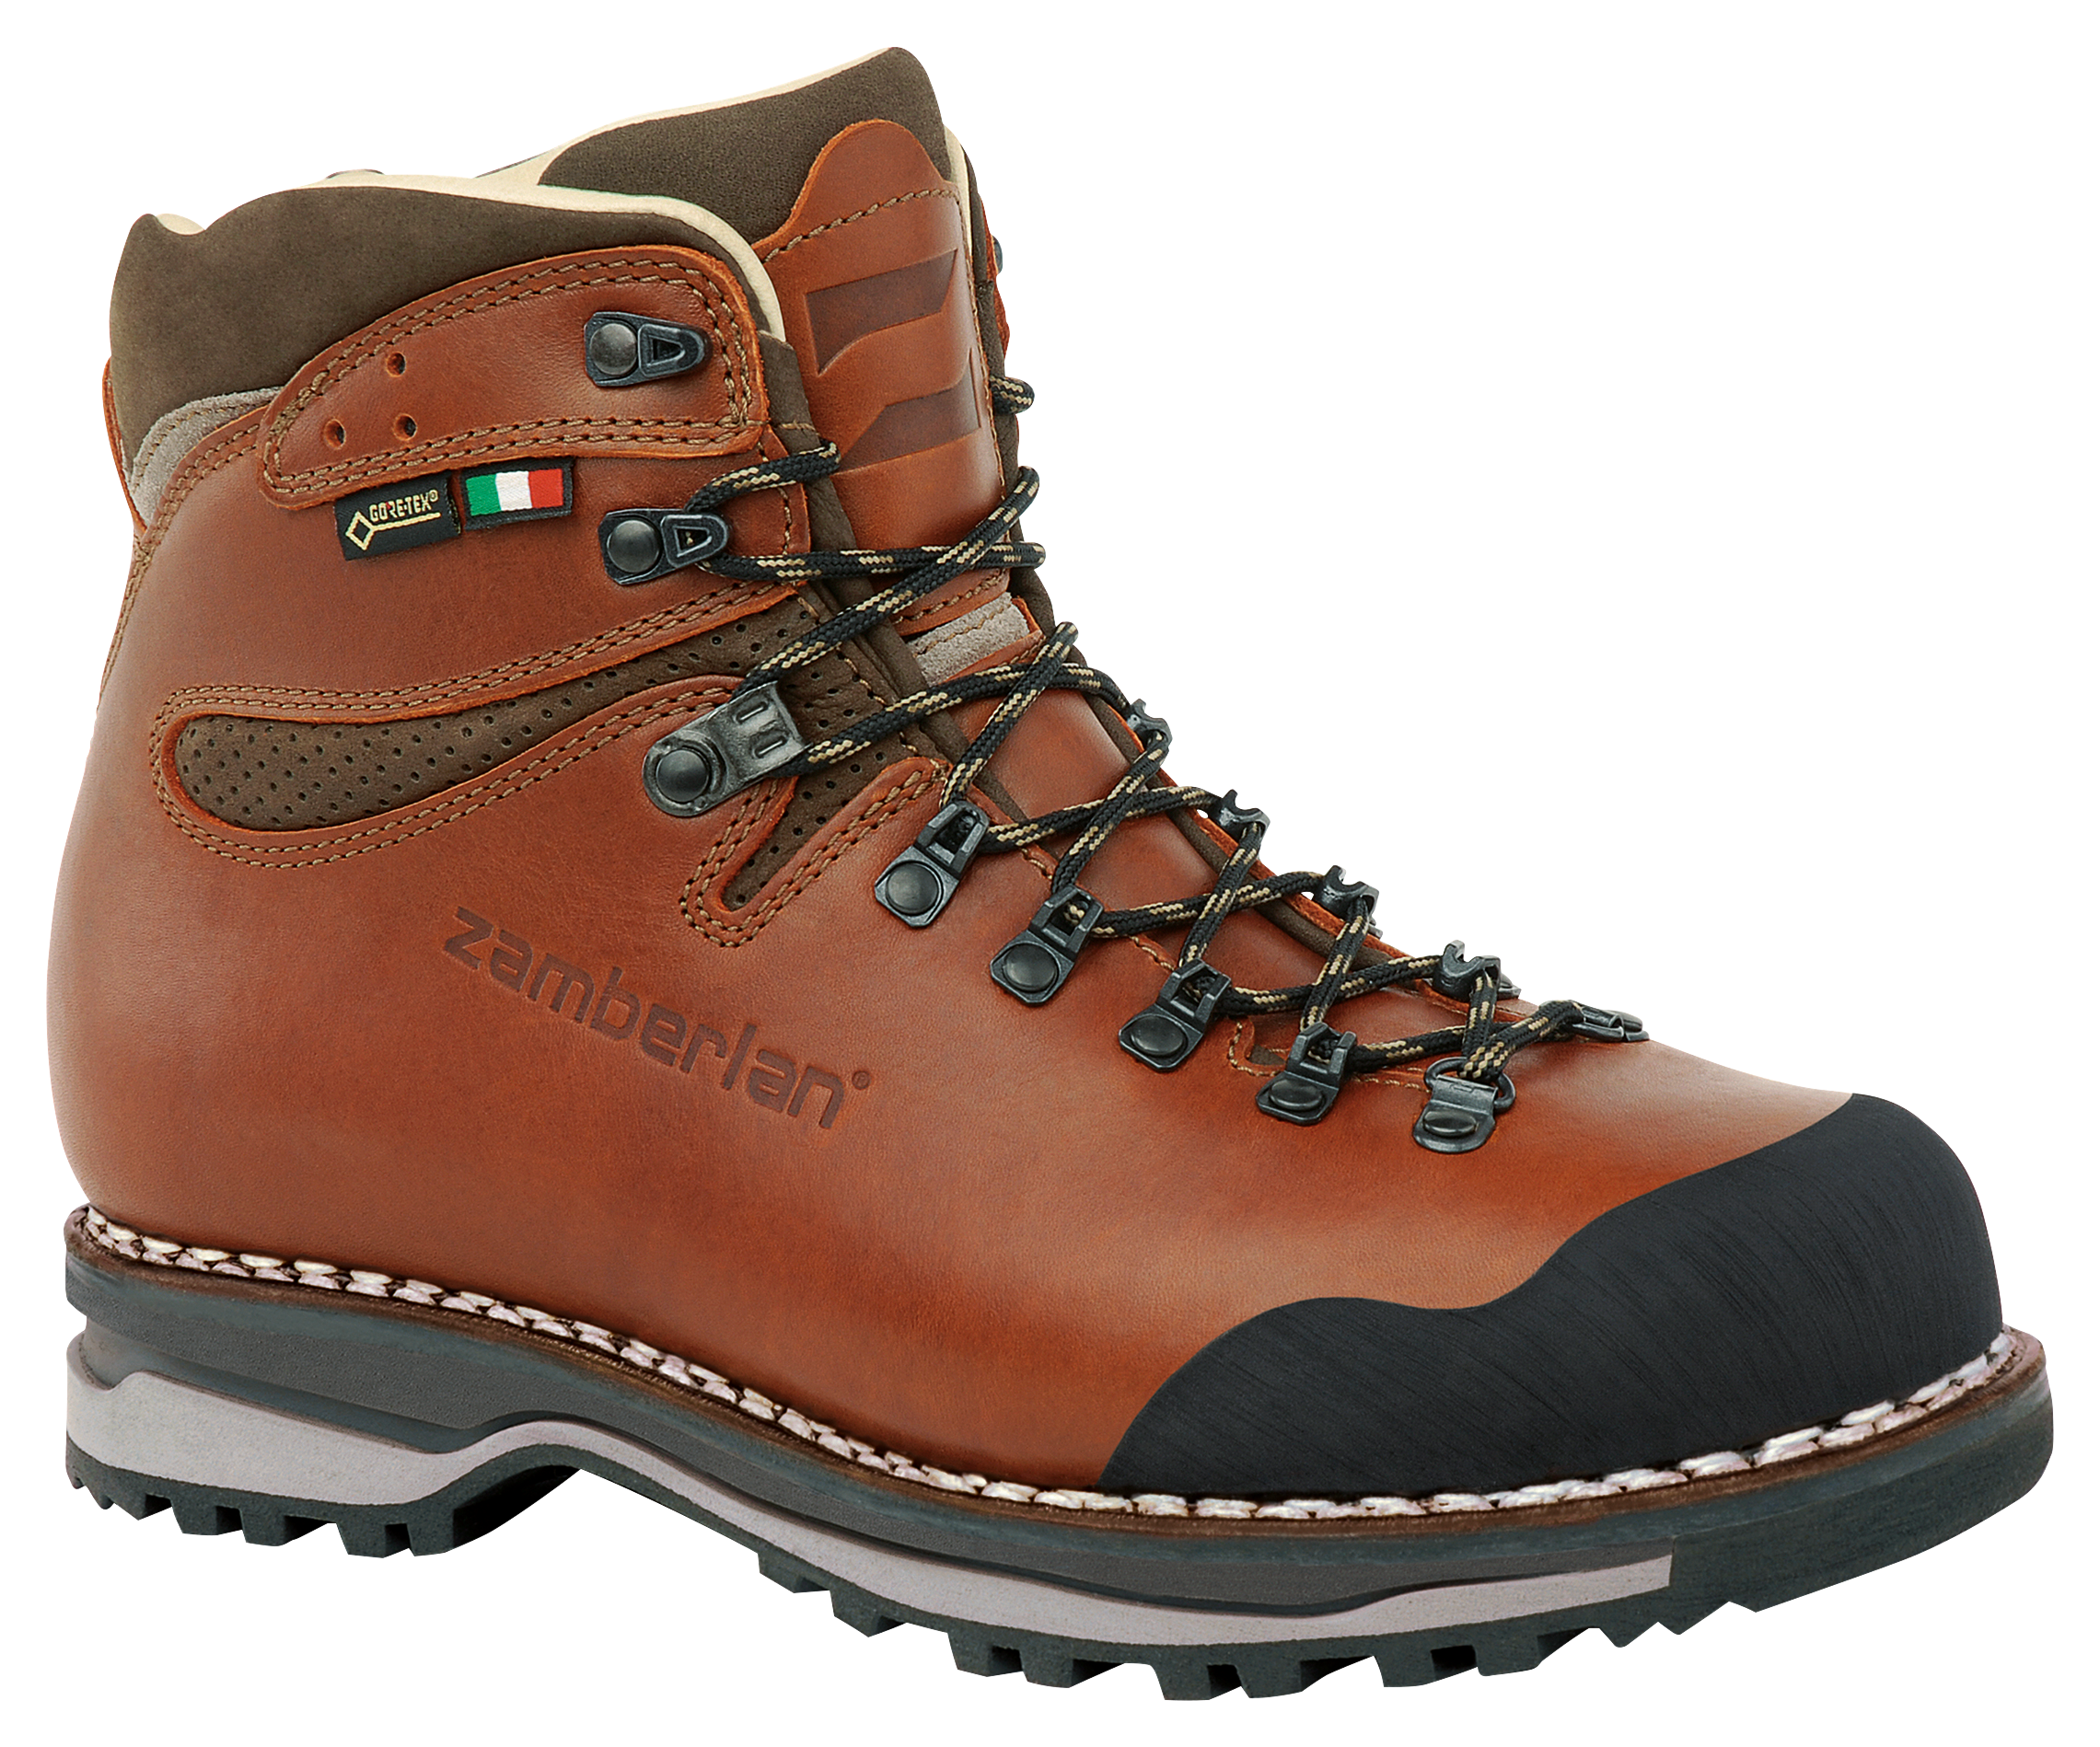 Zamberlan 1025 Tofane NW GTX RR Waterproof Hiking Boots for Men - Waxed Brick - 11M